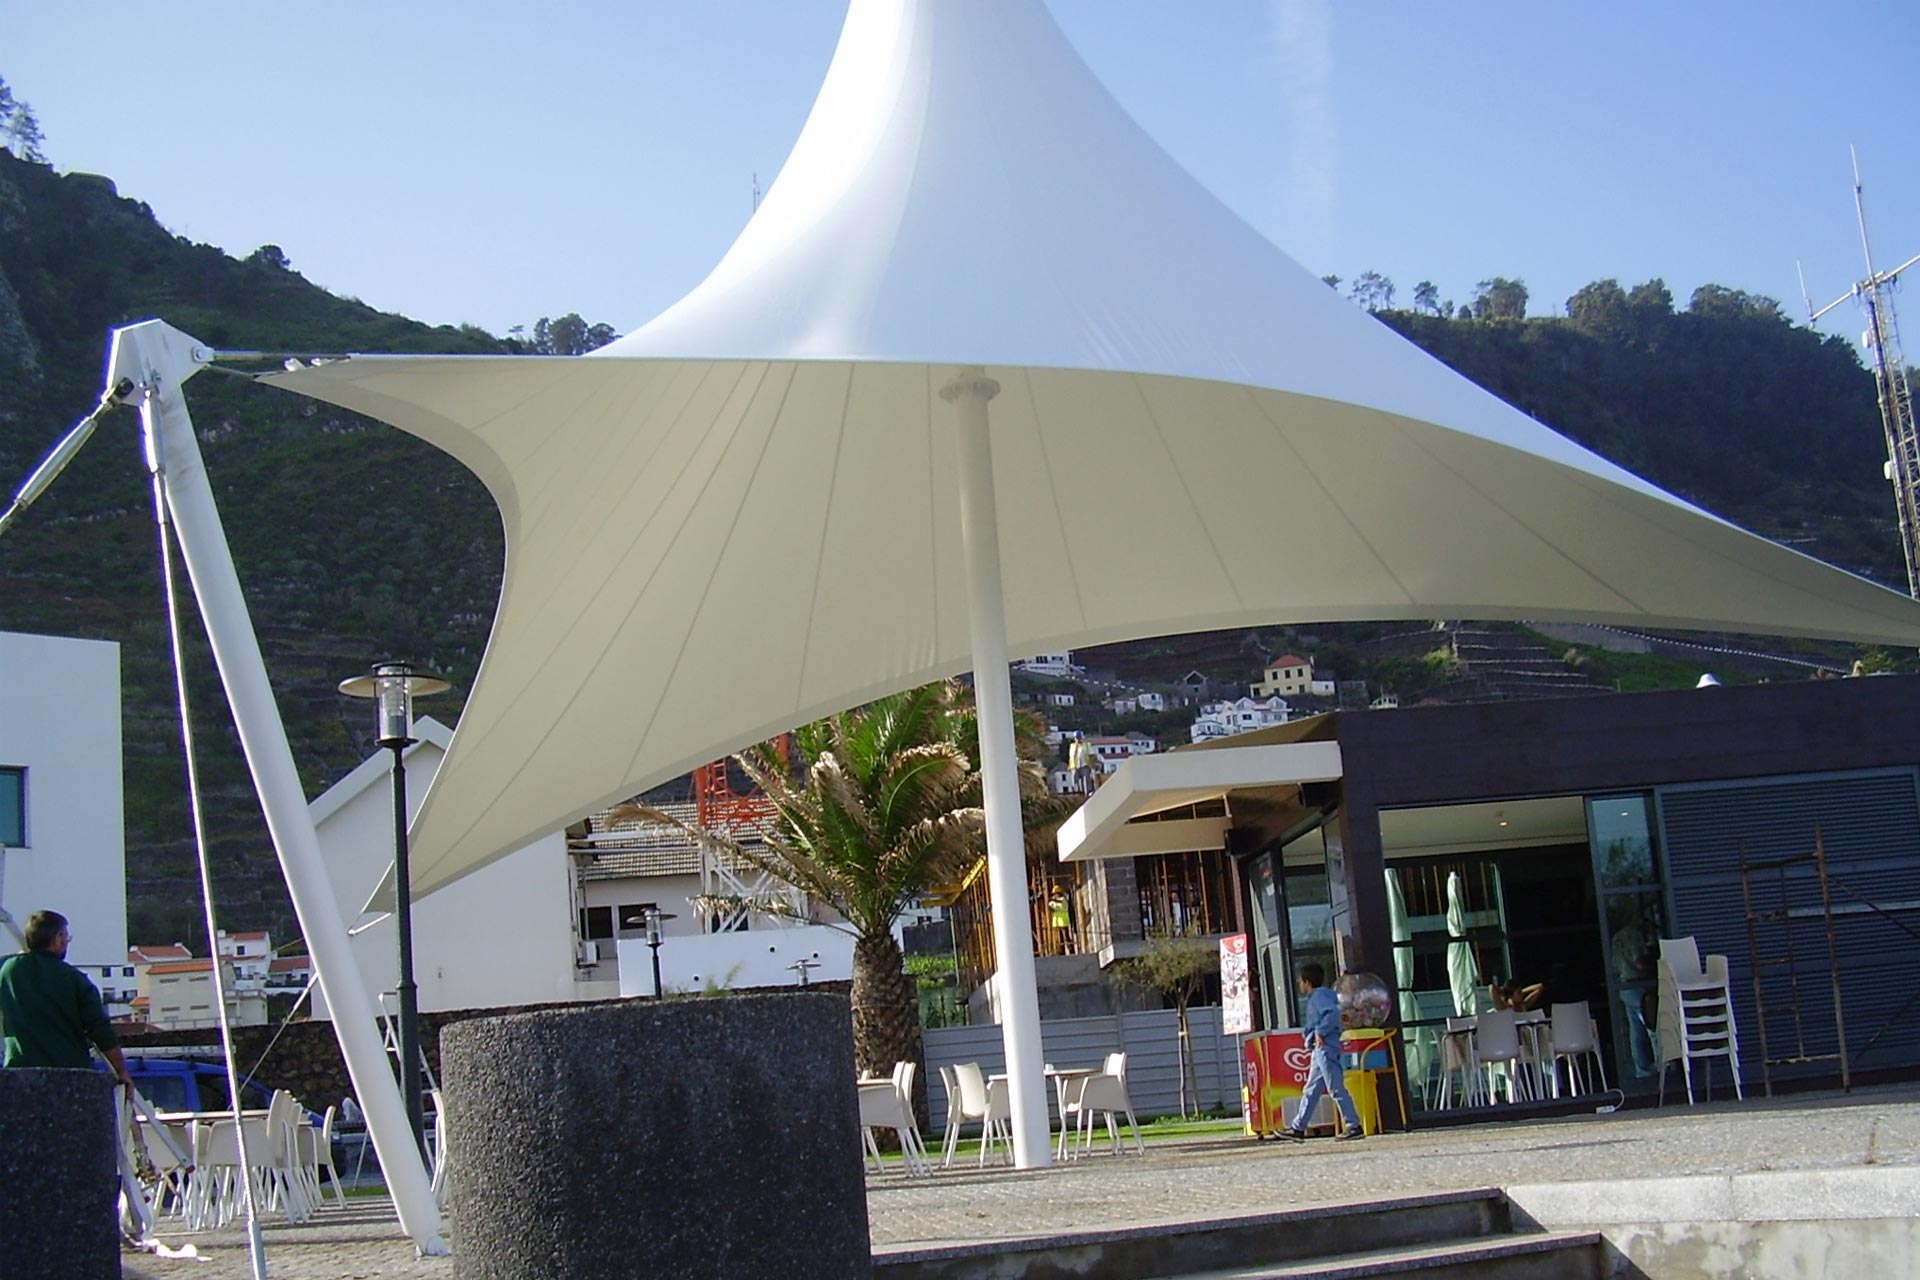 Estructura tensada en terraza de restaurante Porto moniz